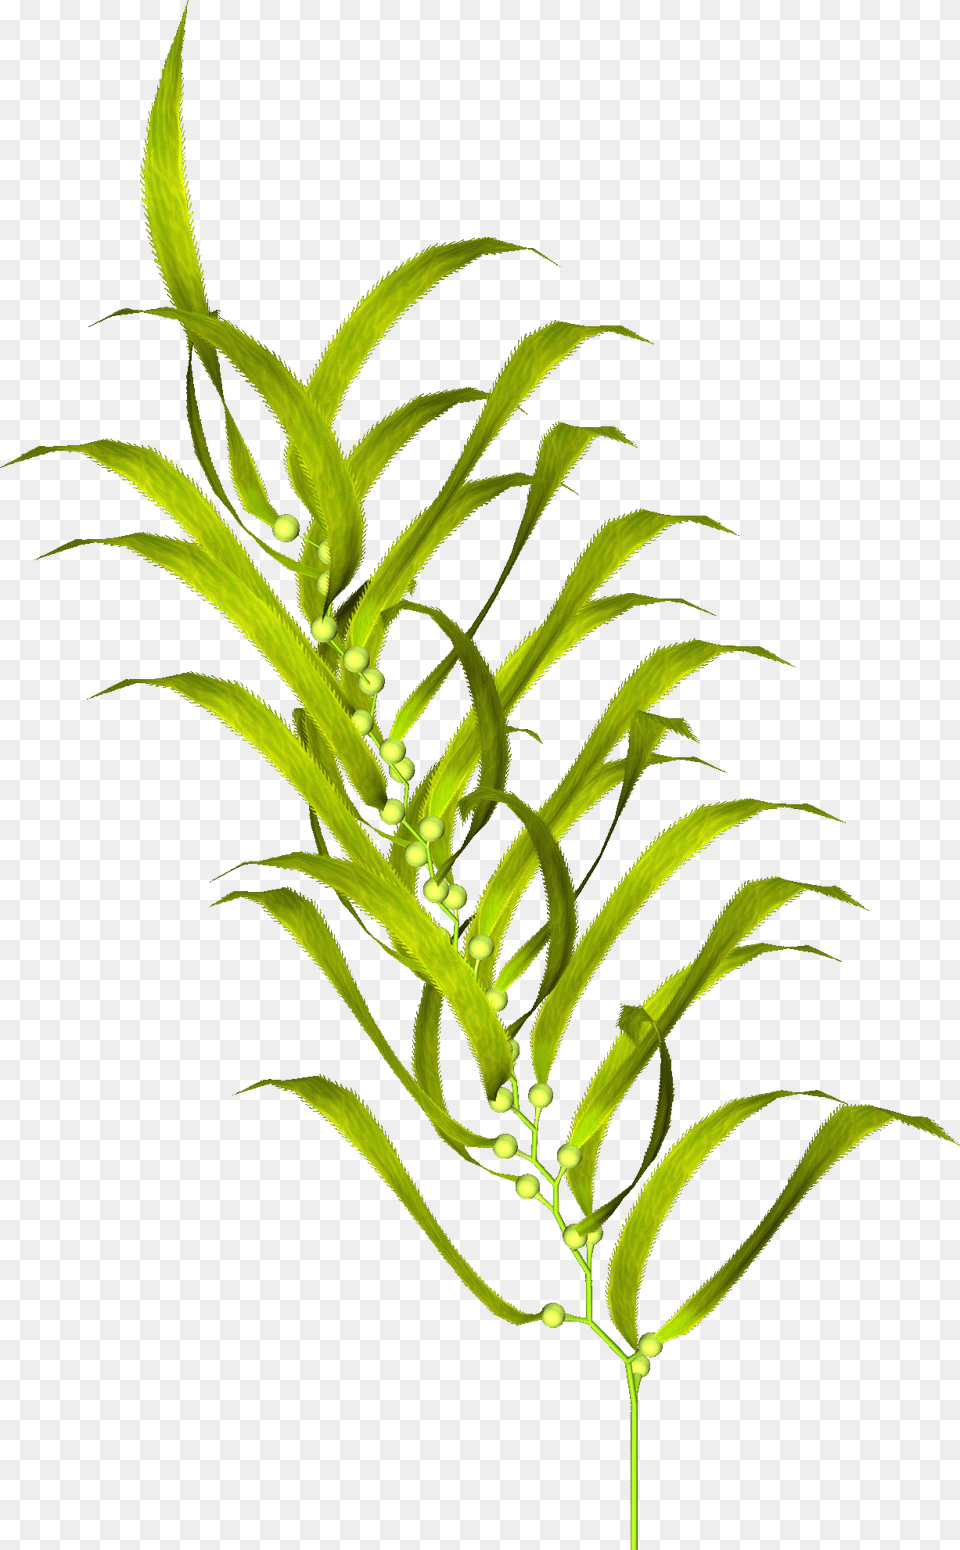 Moss Vector Algae Vodorosli Prozrachnij Fon, Grass, Leaf, Plant, Herbal Free Png Download